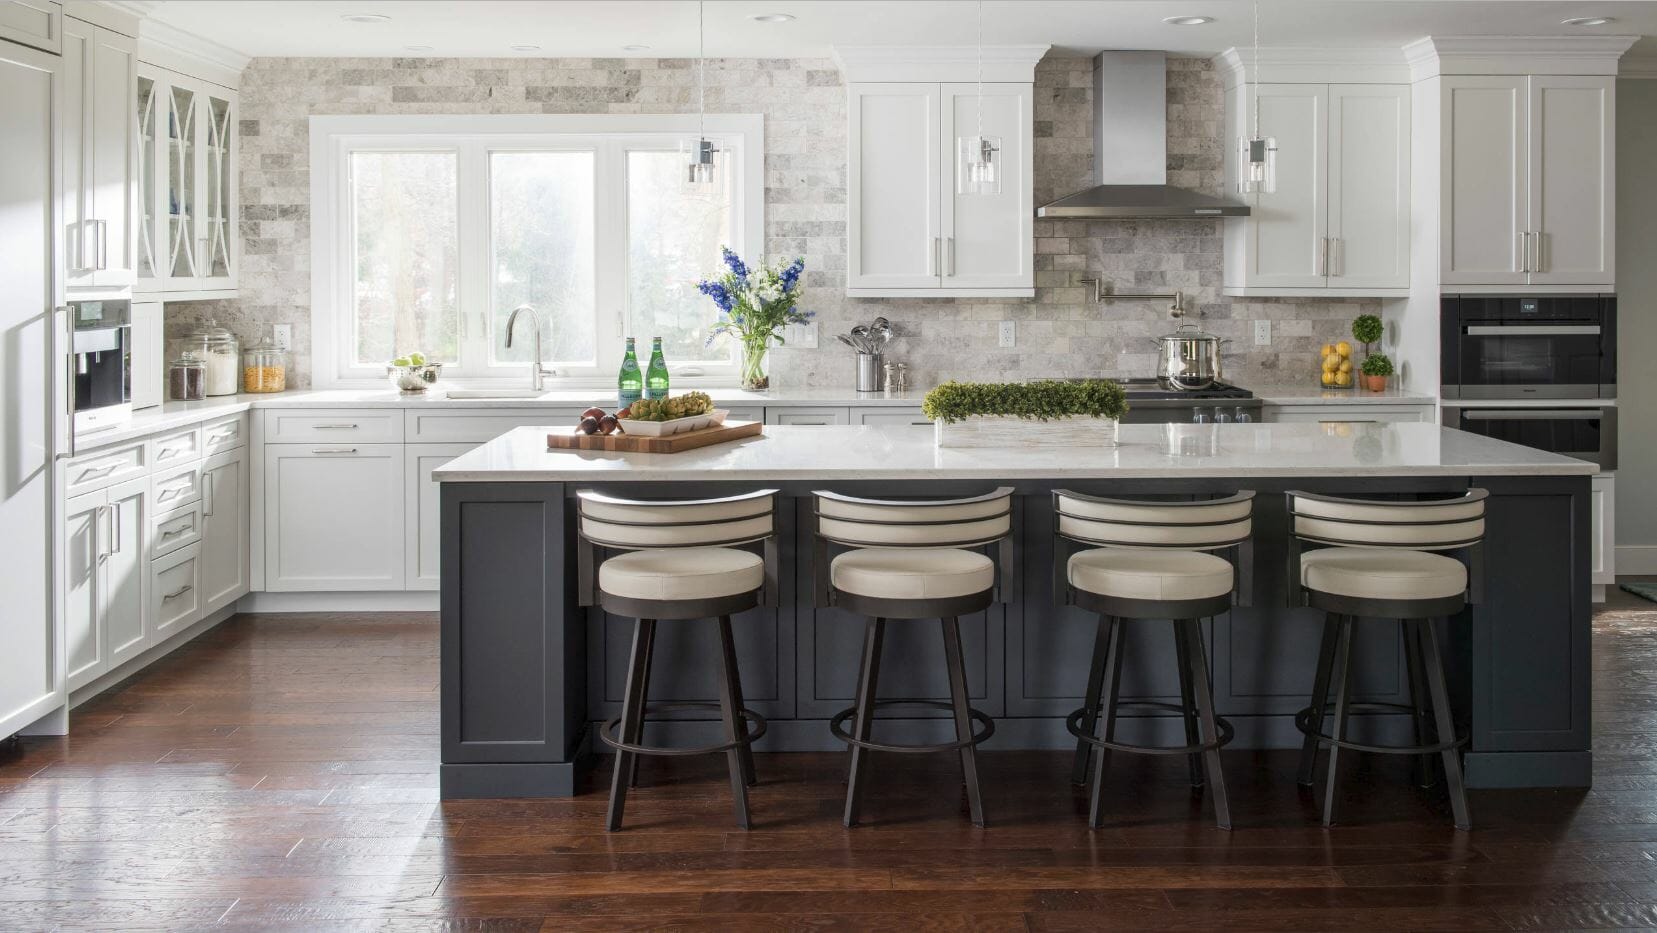 Timeless White Kitchen Designs We Love - Residential Interior